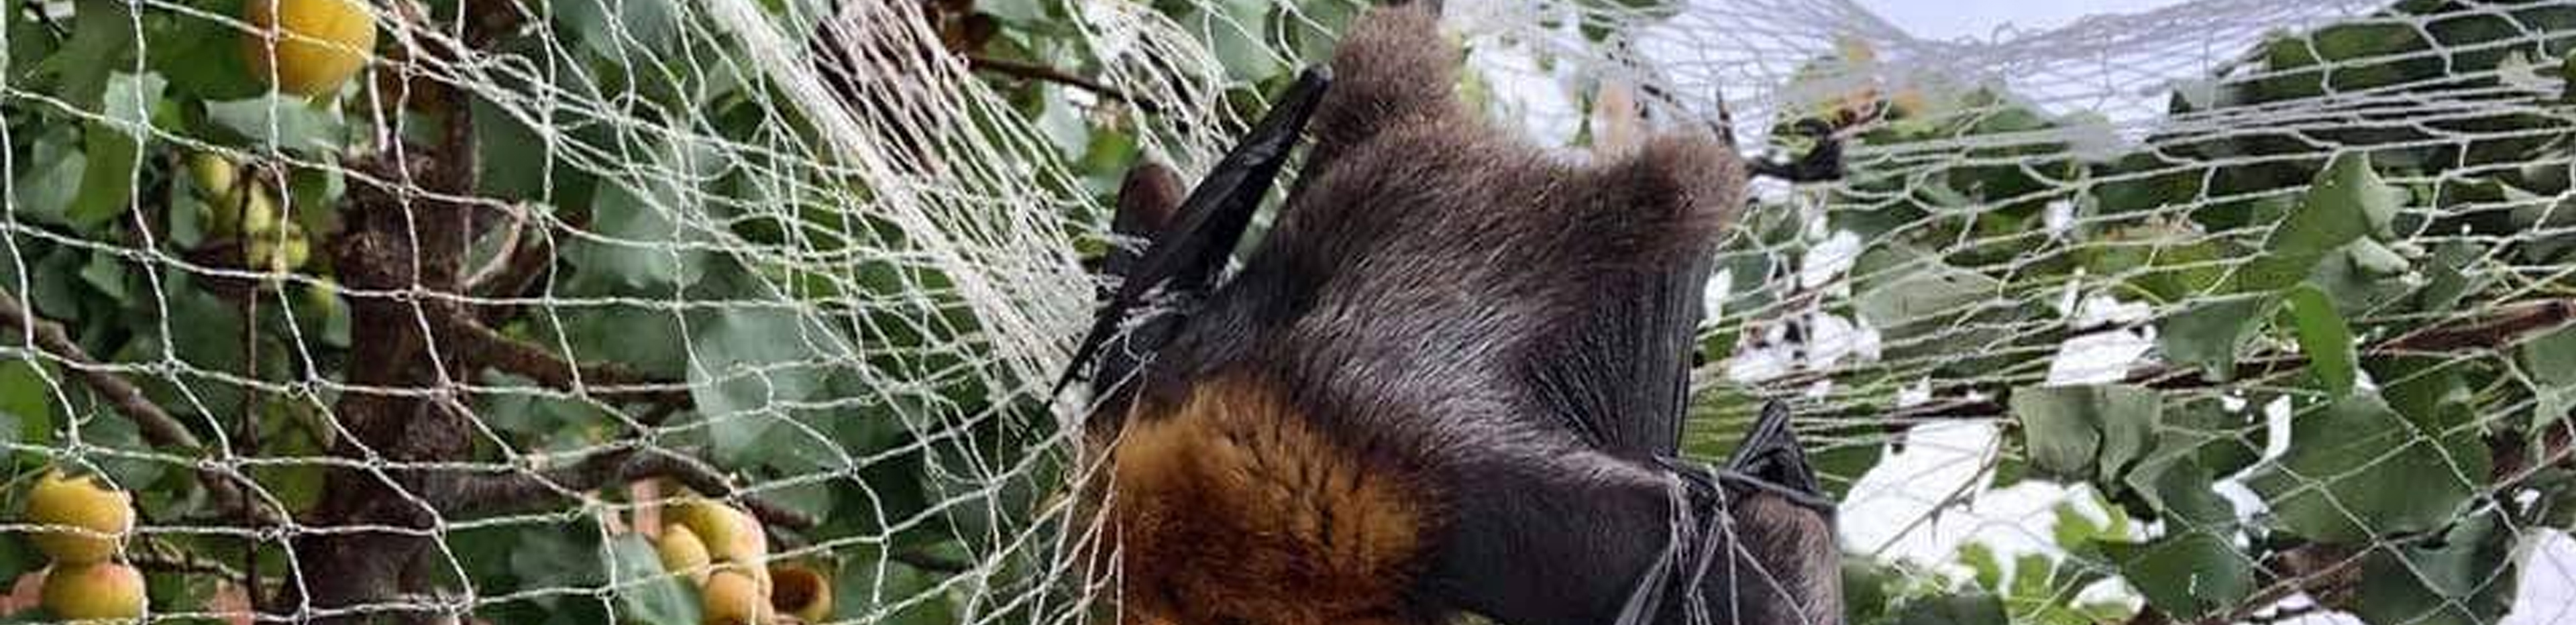 wildlife tangled in fruit tree netting